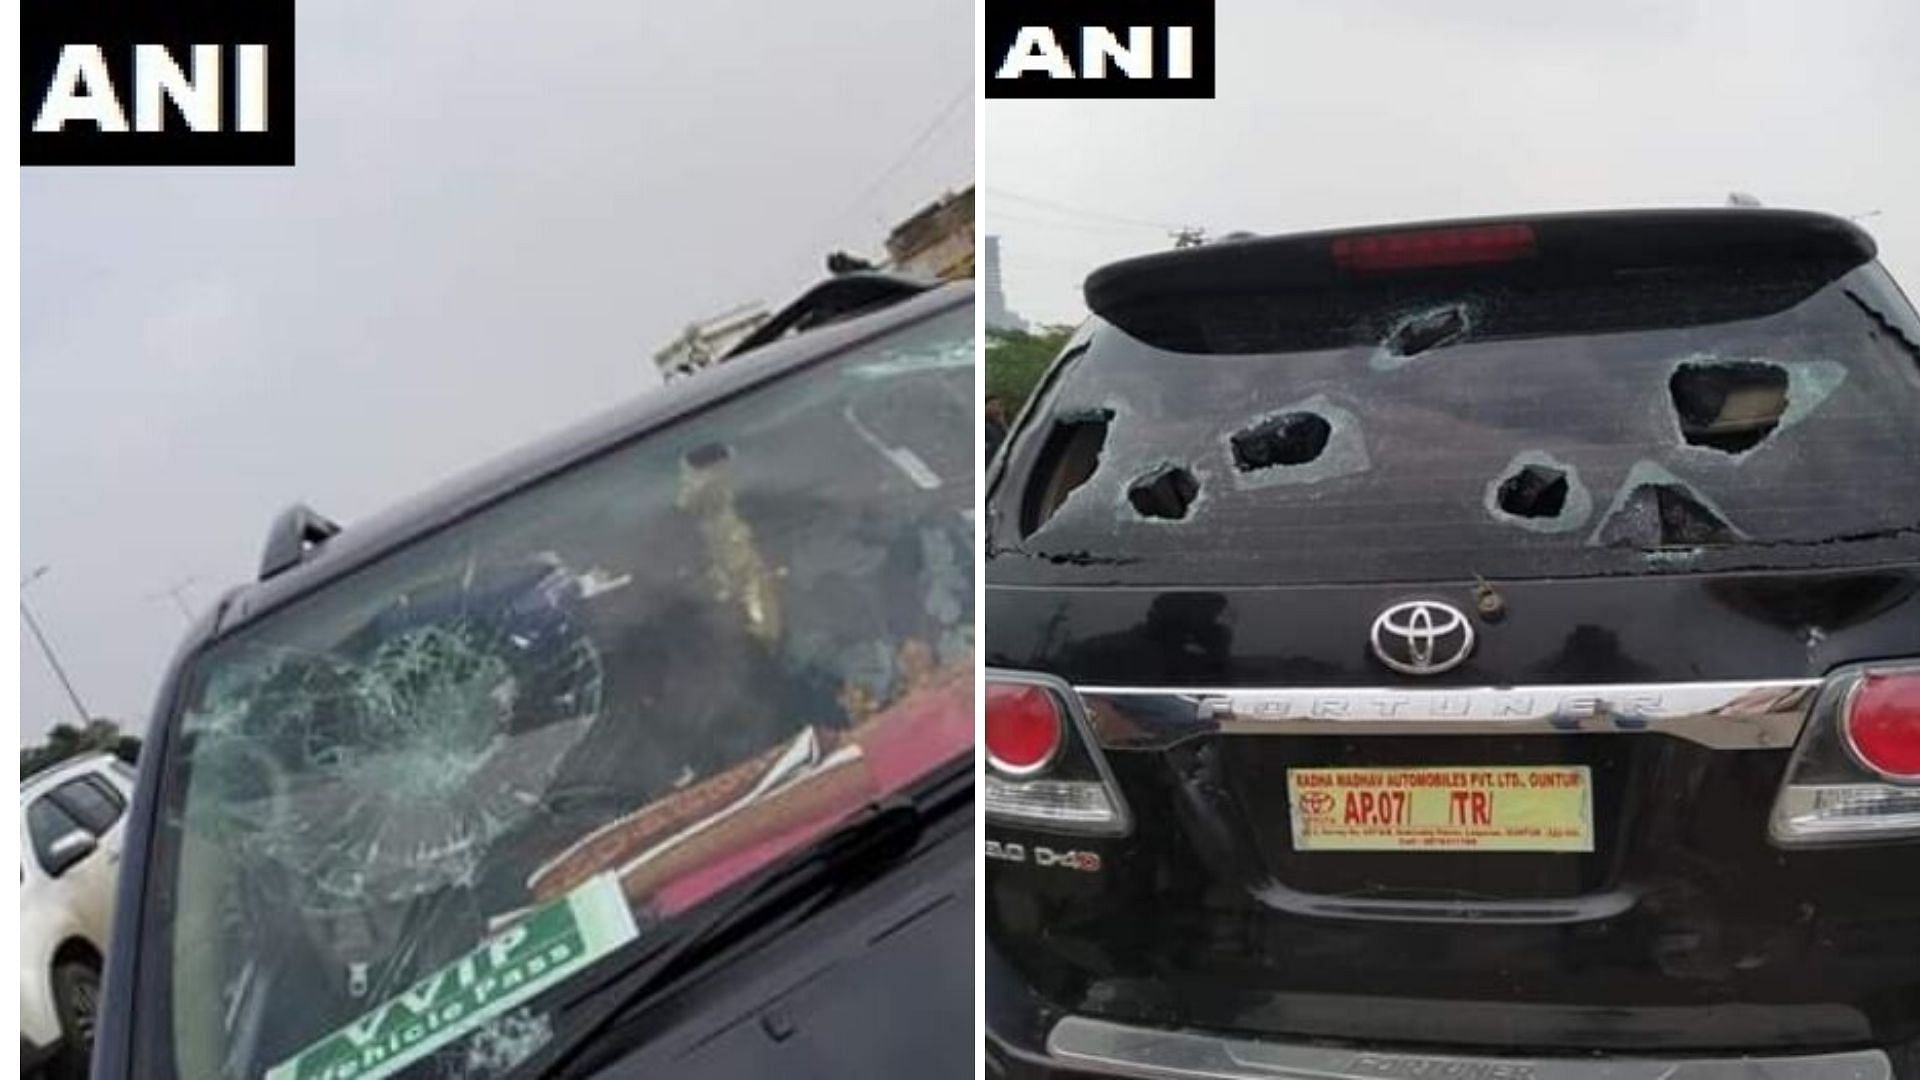 YSRCP MLA Pinnelli Ramakrishna Reddy’s car vandalised on National Highway 16 near Chinna Kakani village in Guntur district, Andhra Pradesh